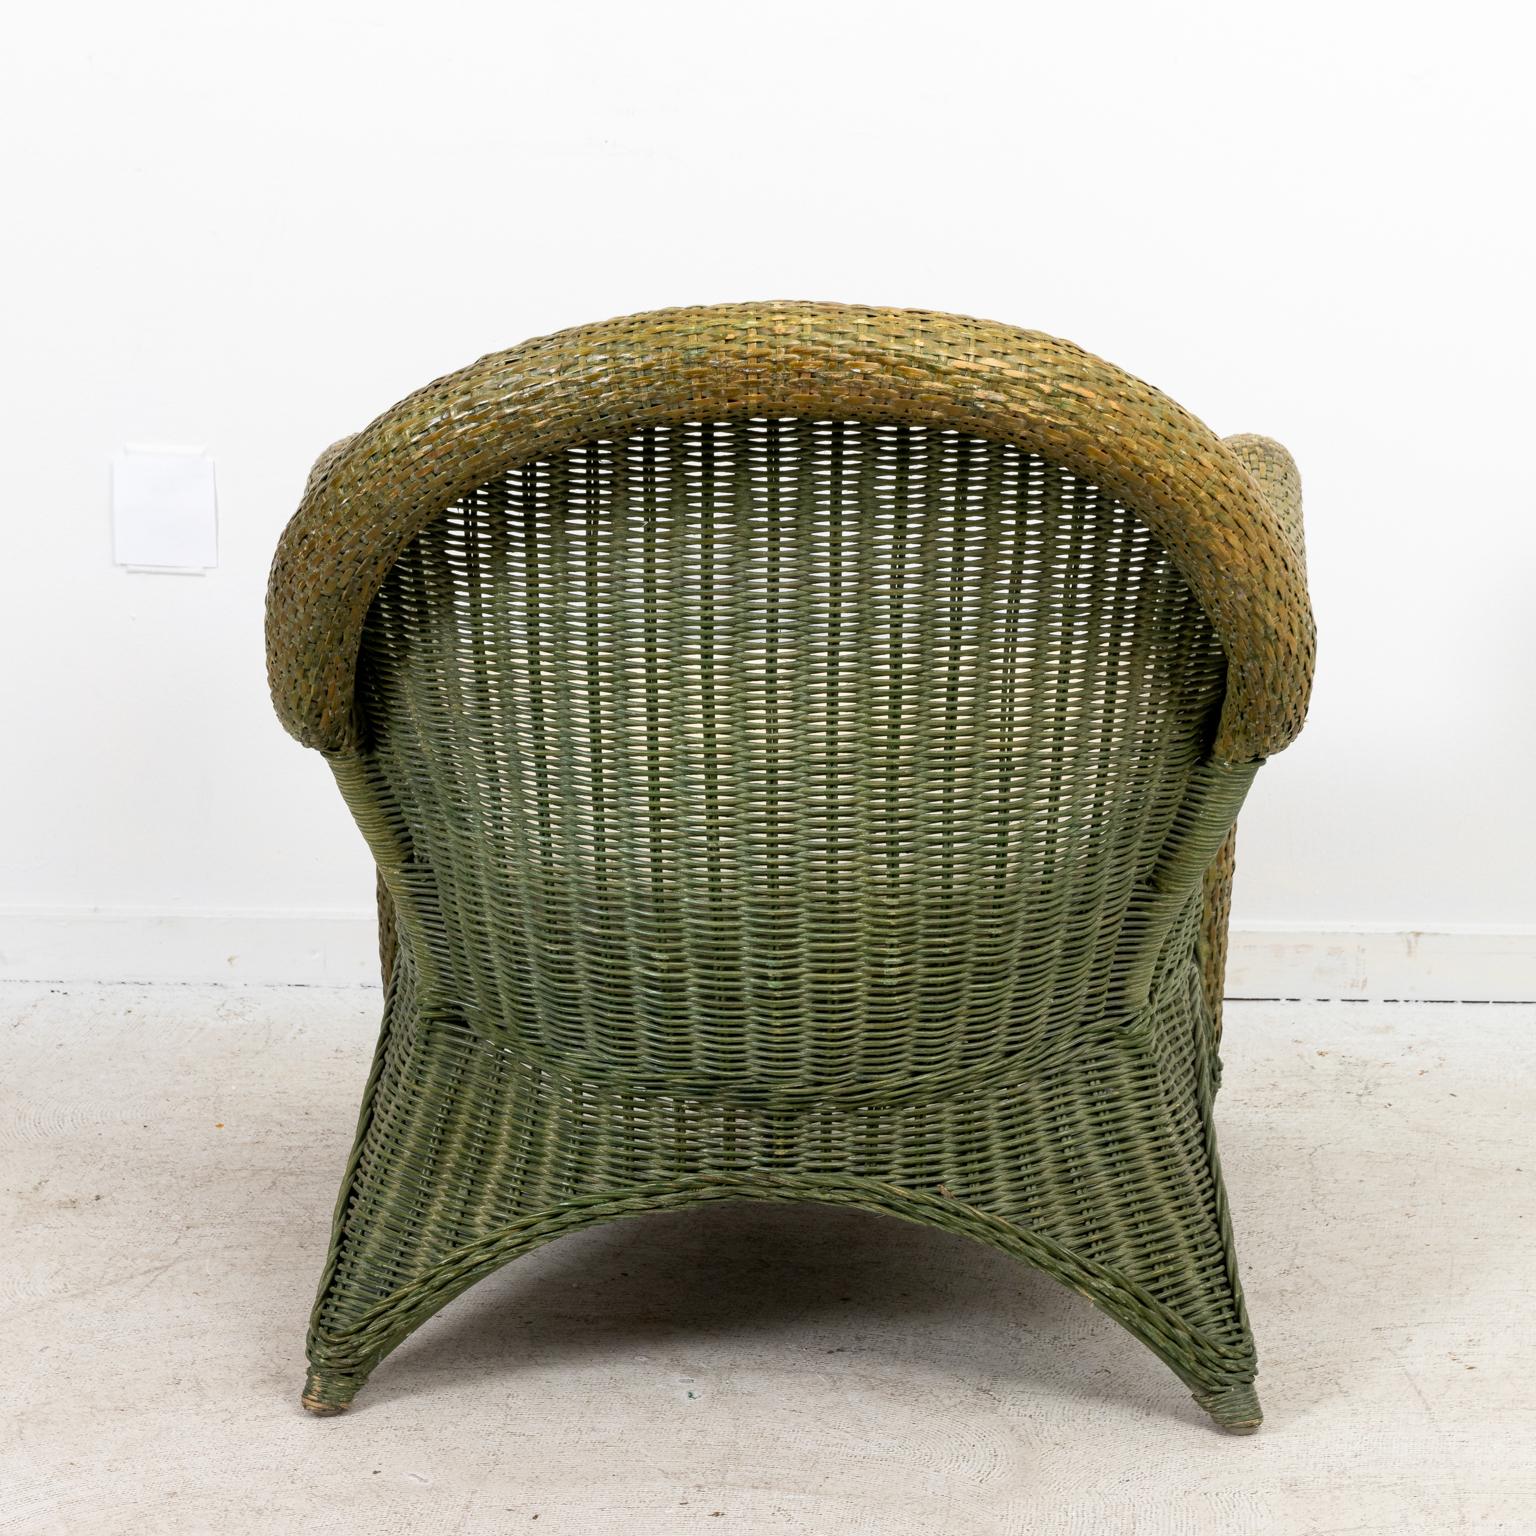 vintage rattan chair -china -b2b -forum -blog -wikipedia -.cn -.gov -alibaba